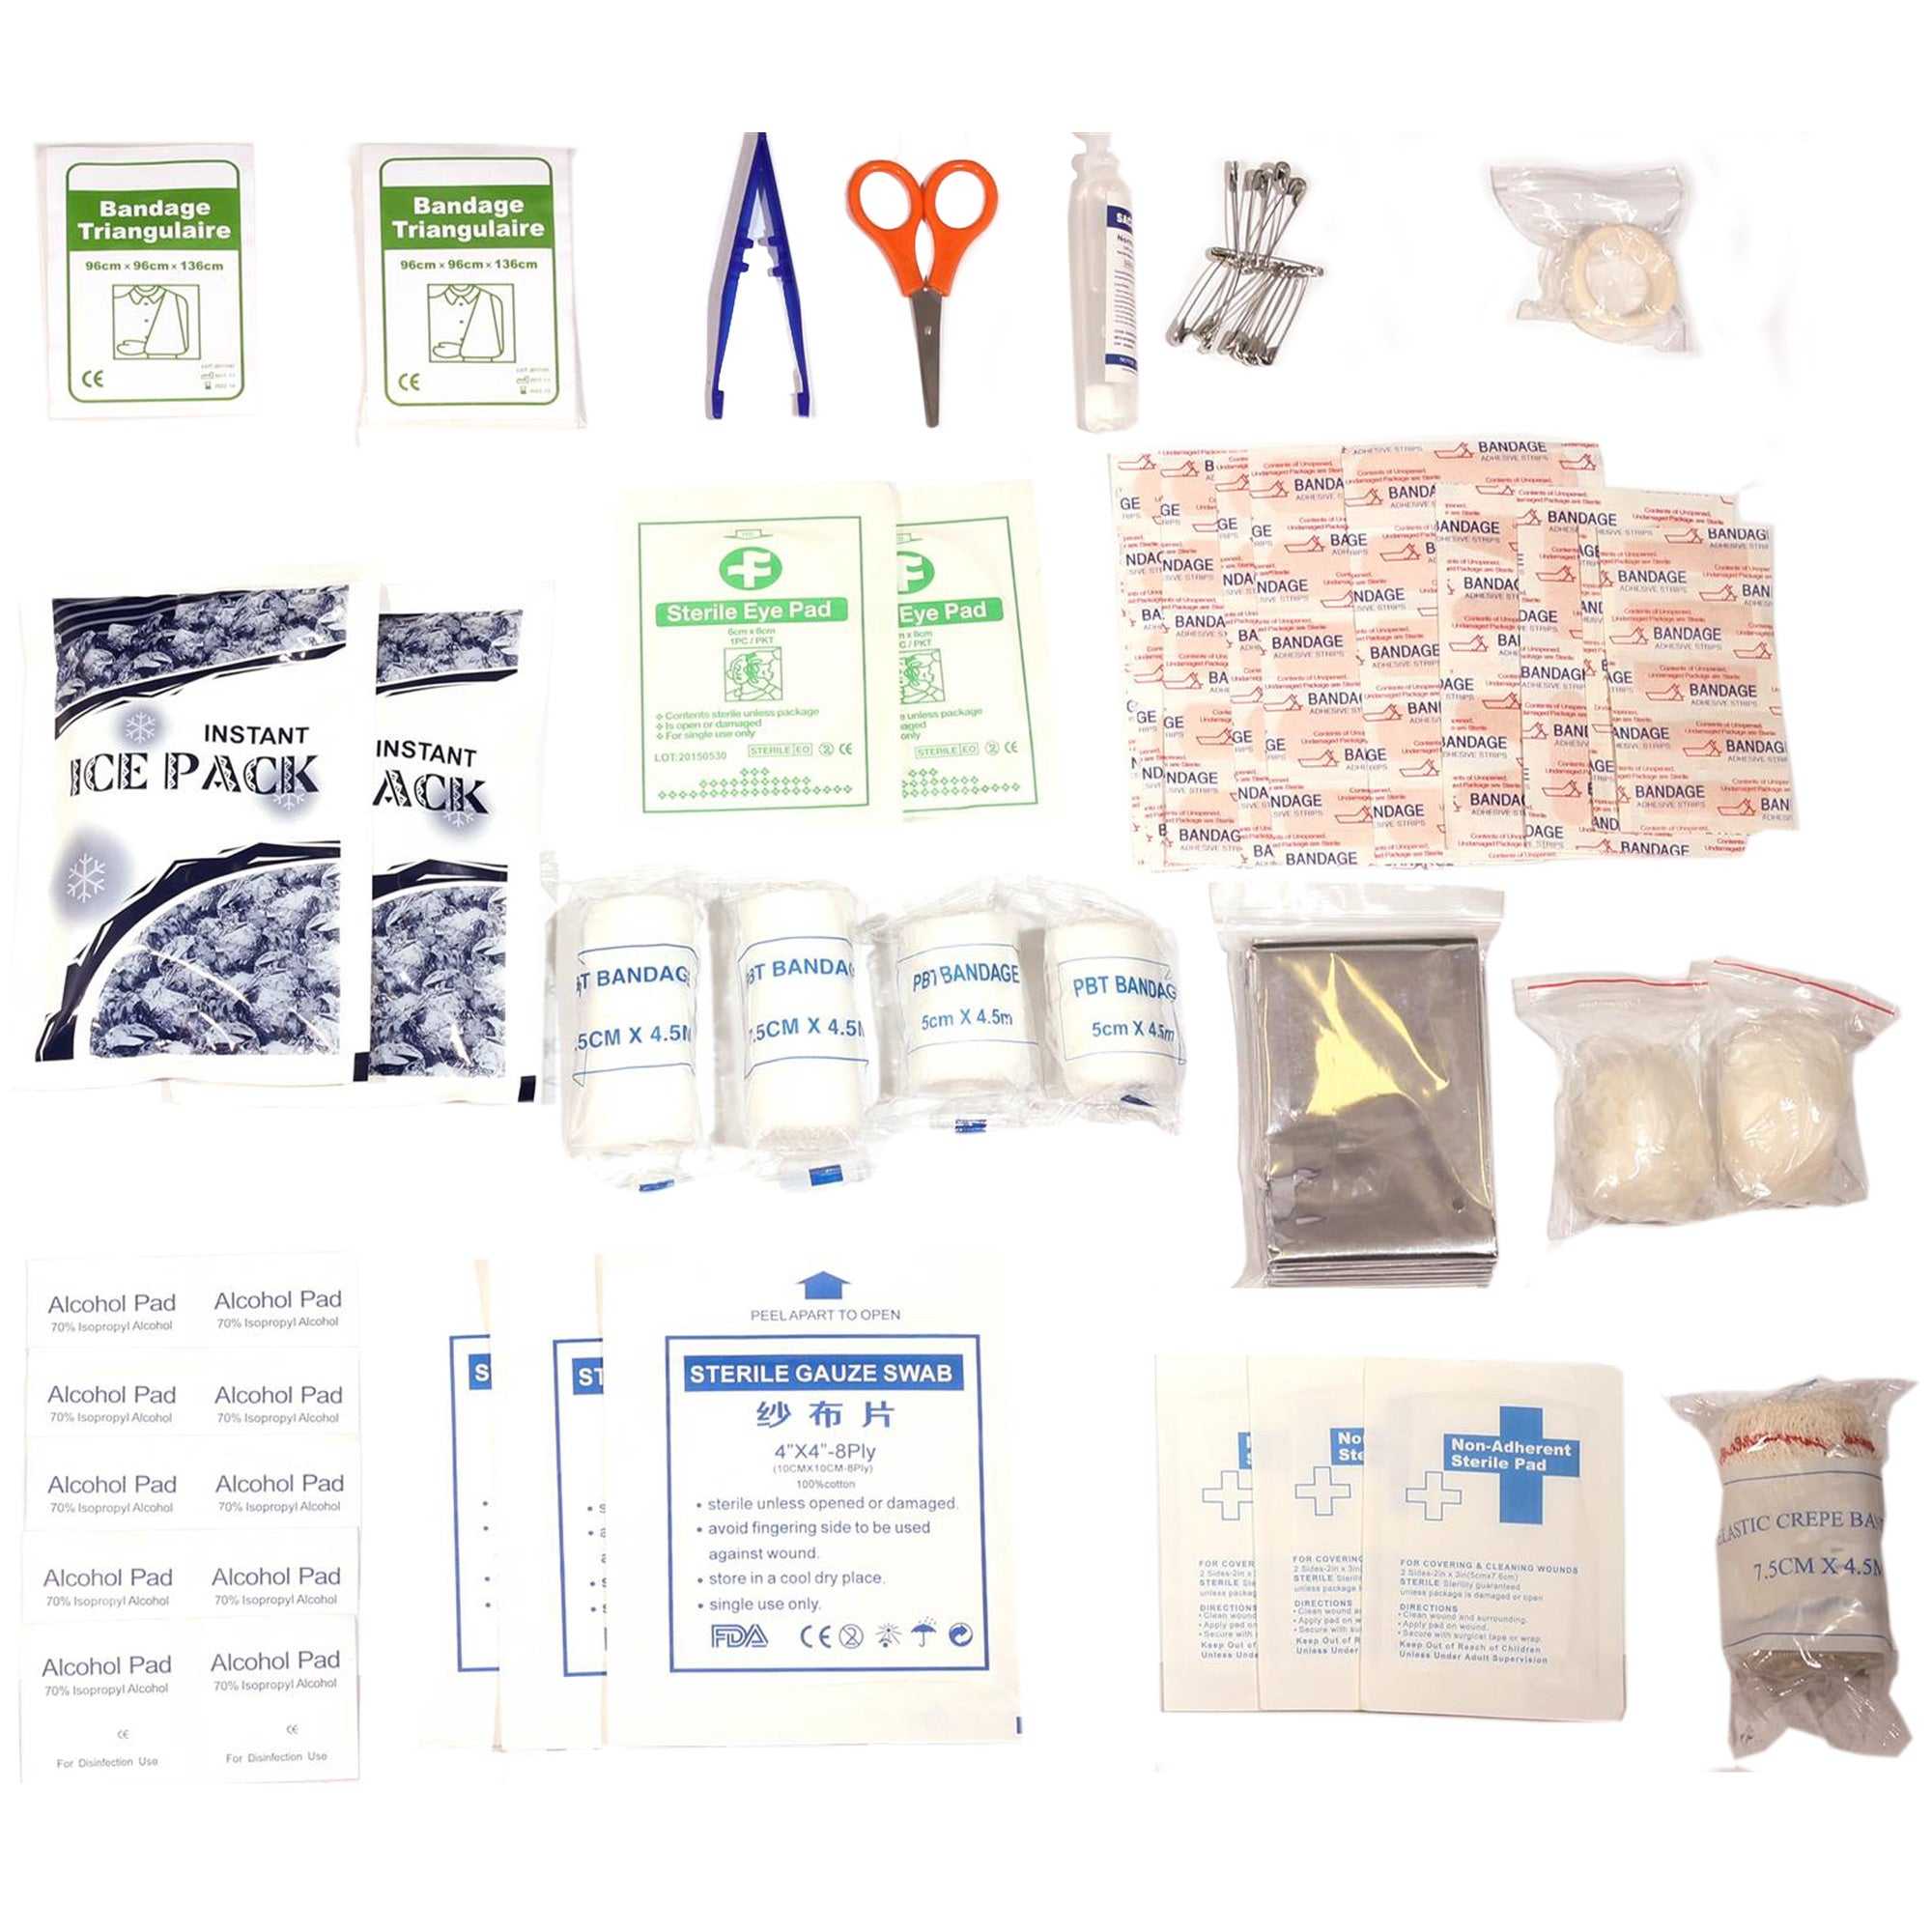 Optimum 90 Piece First Aid Kit Emergency Essentials - Optimum